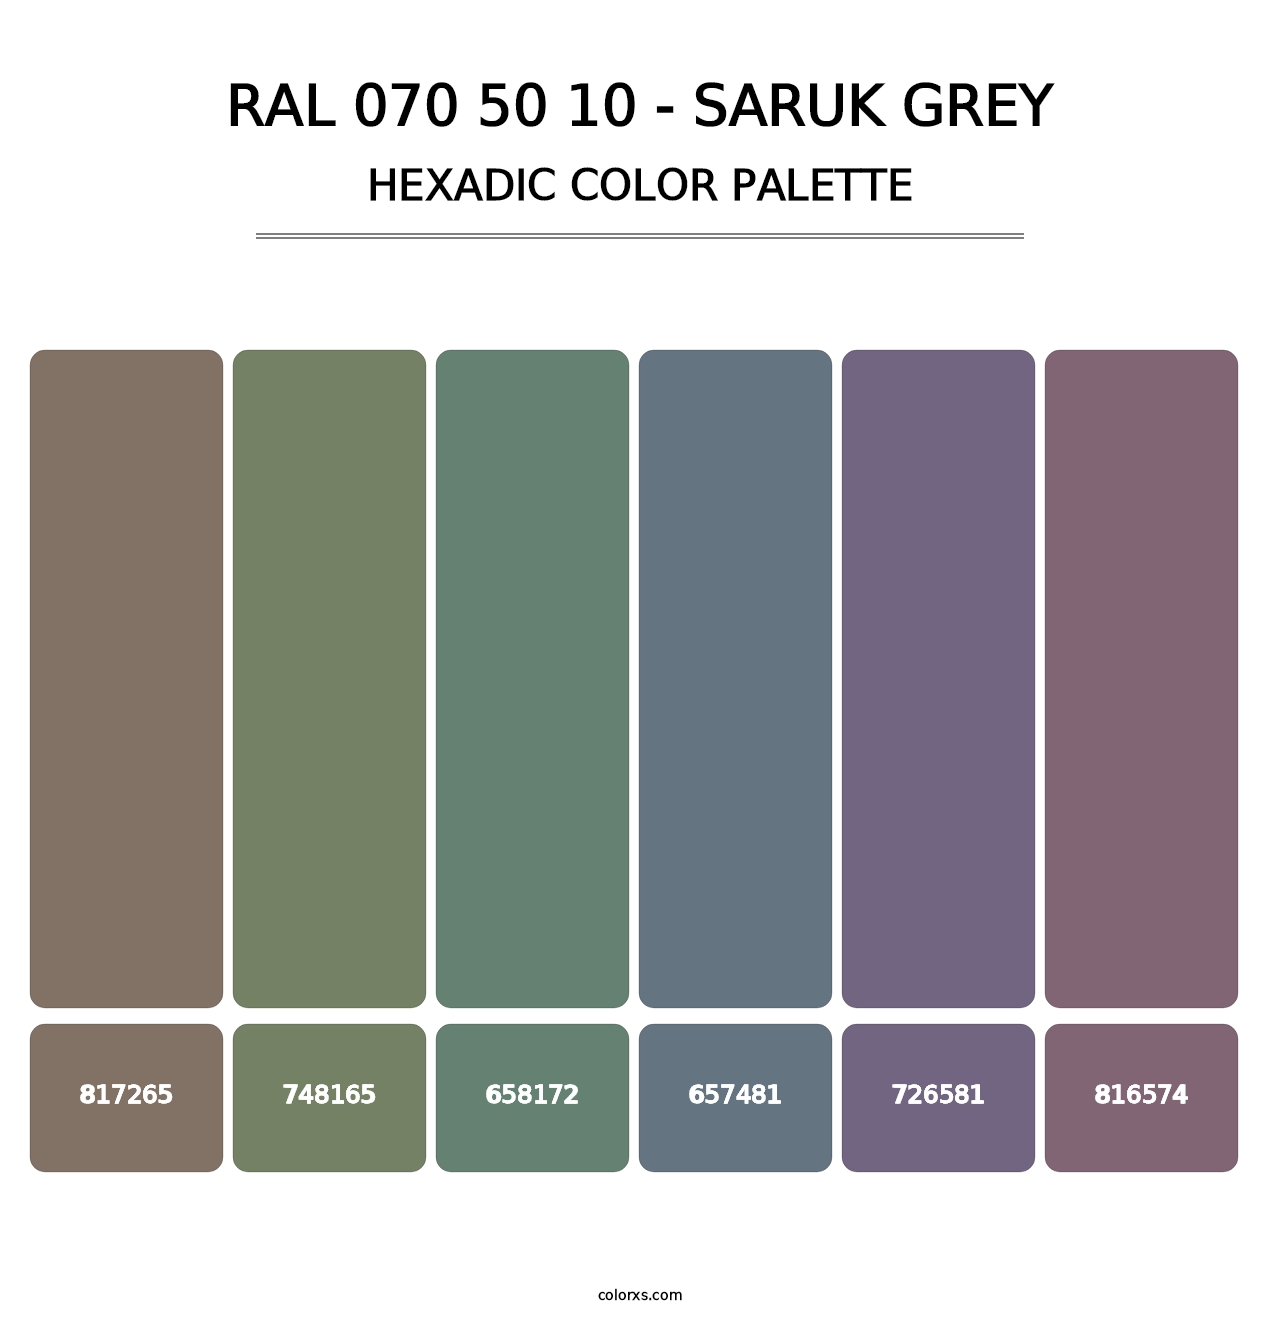 RAL 070 50 10 - Saruk Grey - Hexadic Color Palette